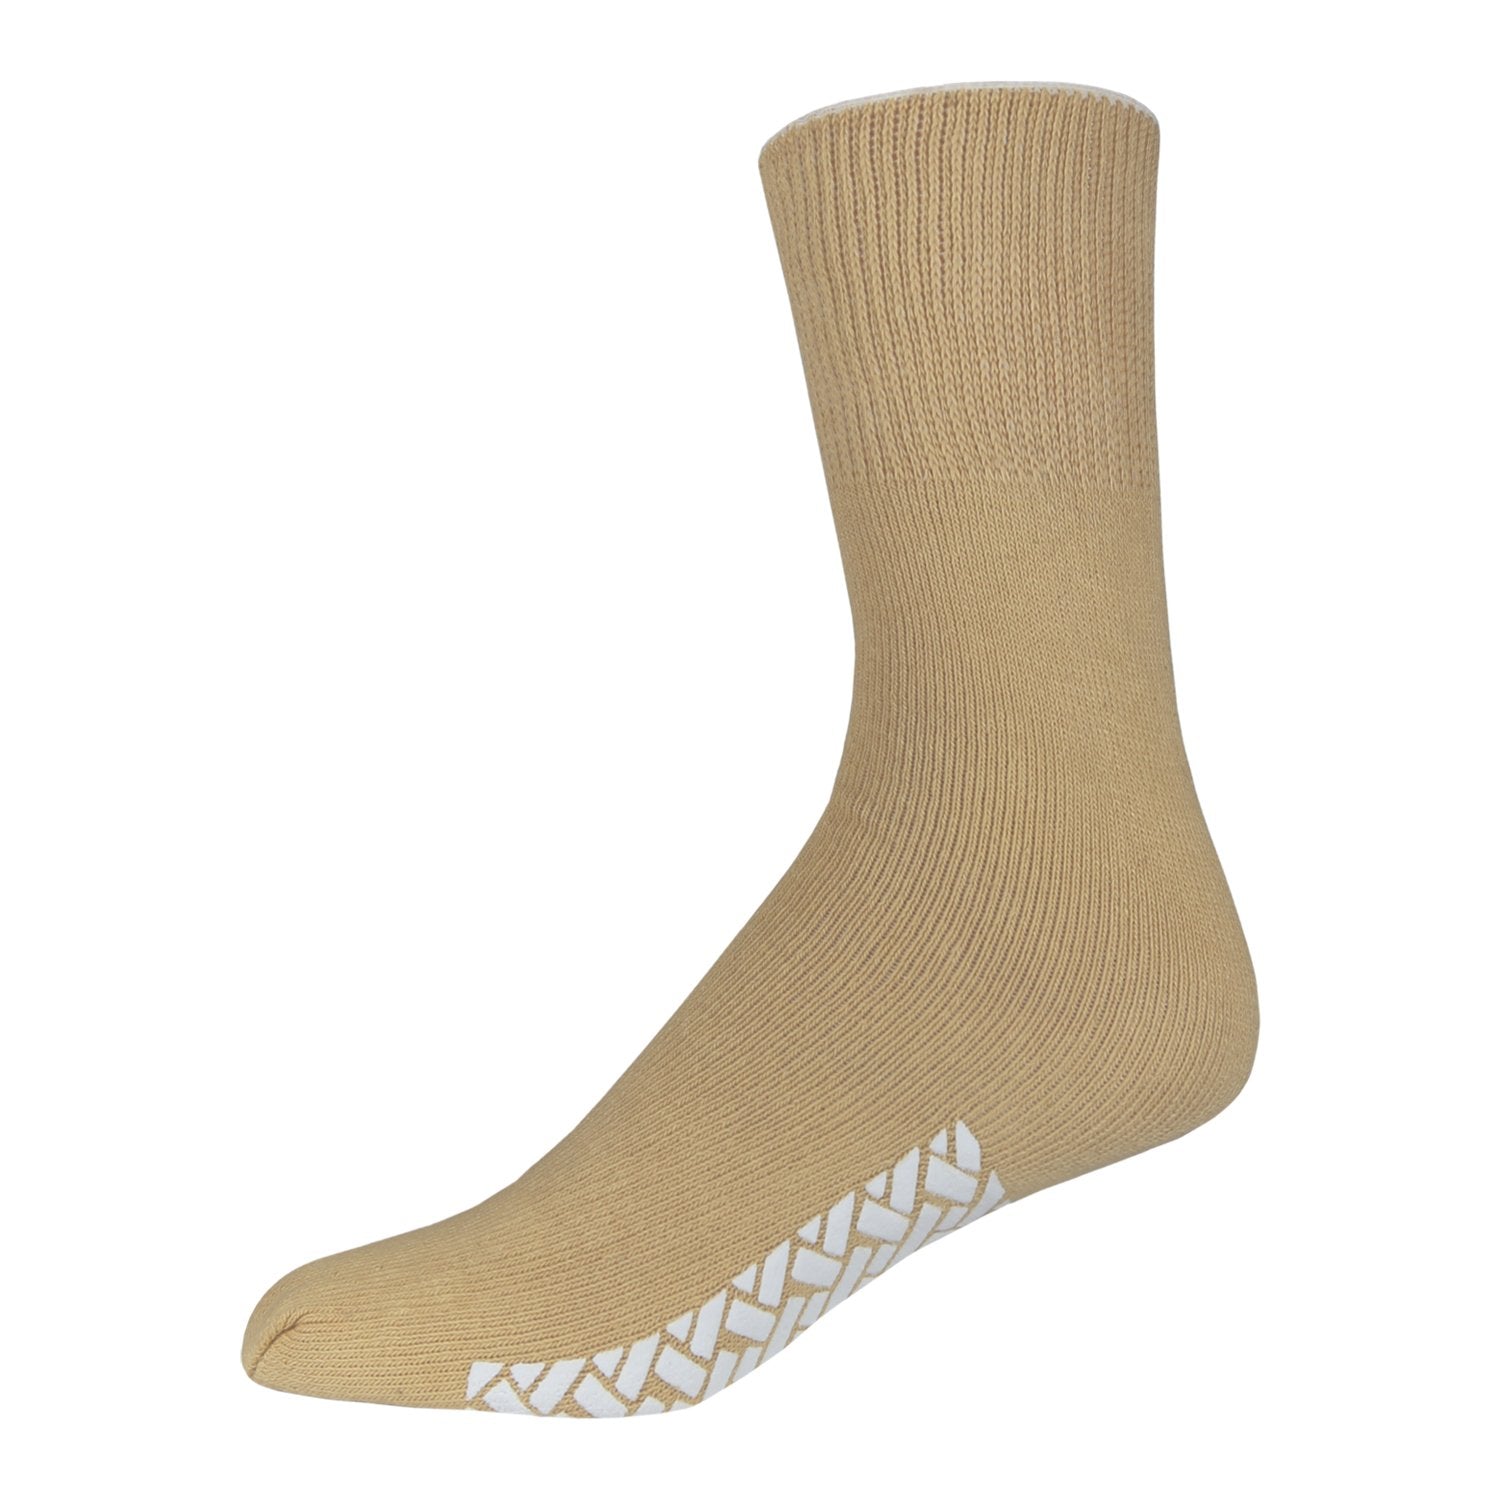 Men's Non Skid Diabetic Socks, Cotton With Rubber Gripper Bottom, Size 10-13